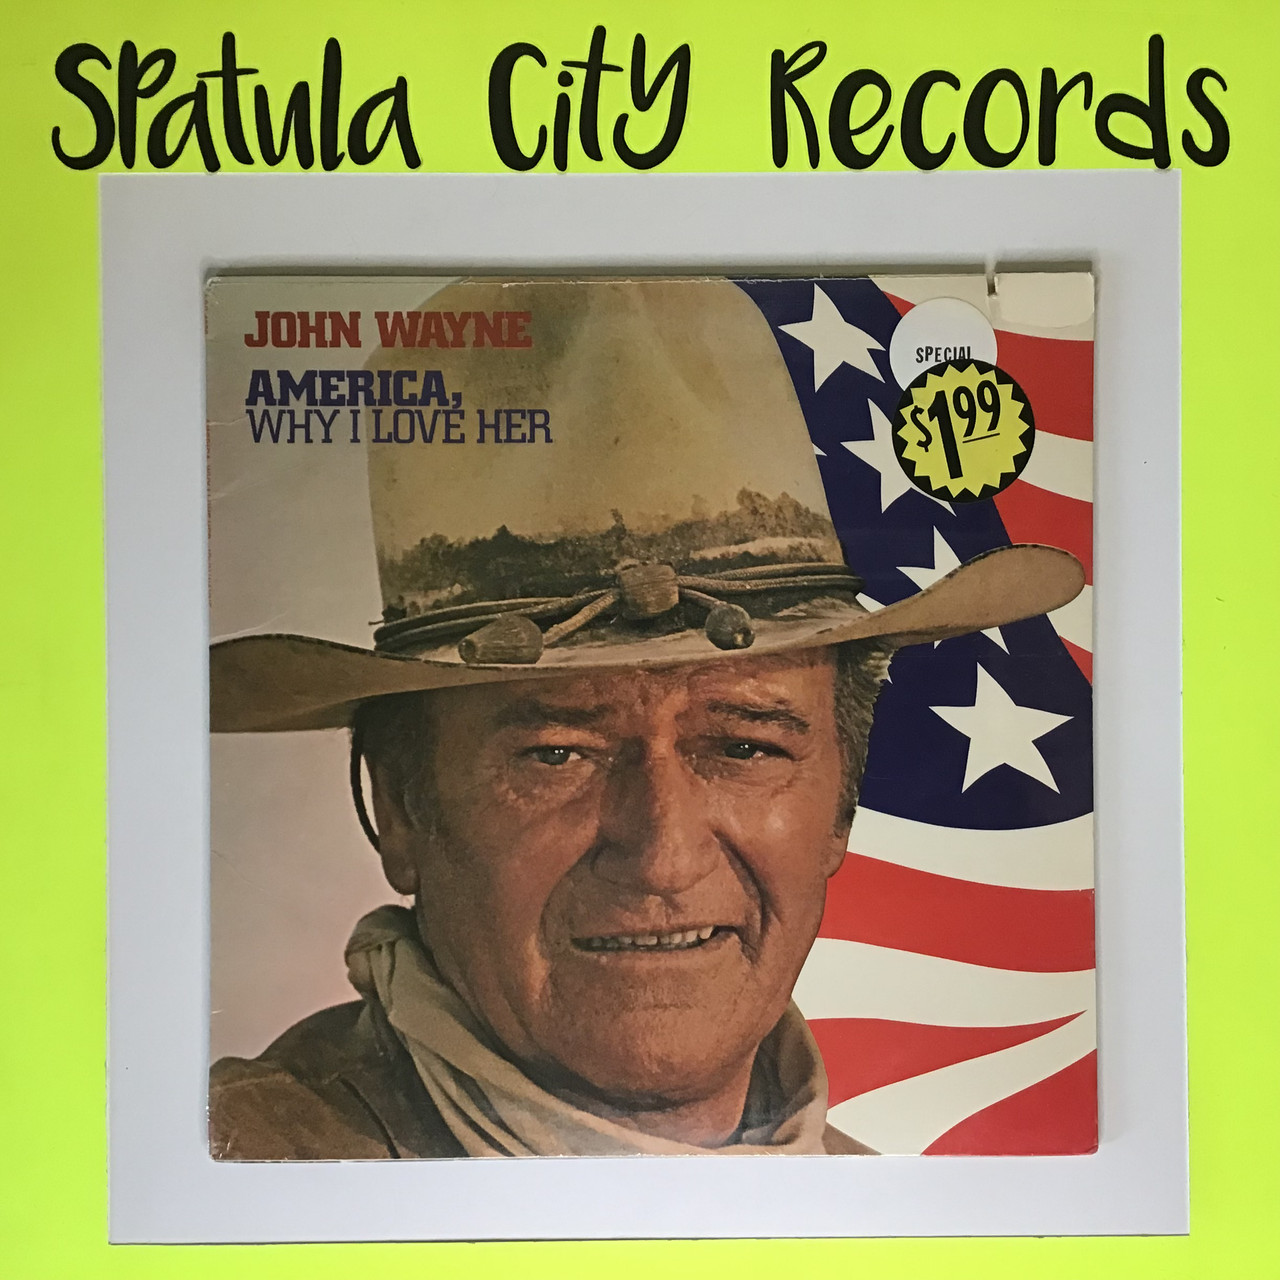 John Wayne - America, Why I love her - Sealed - vinyl record album LP